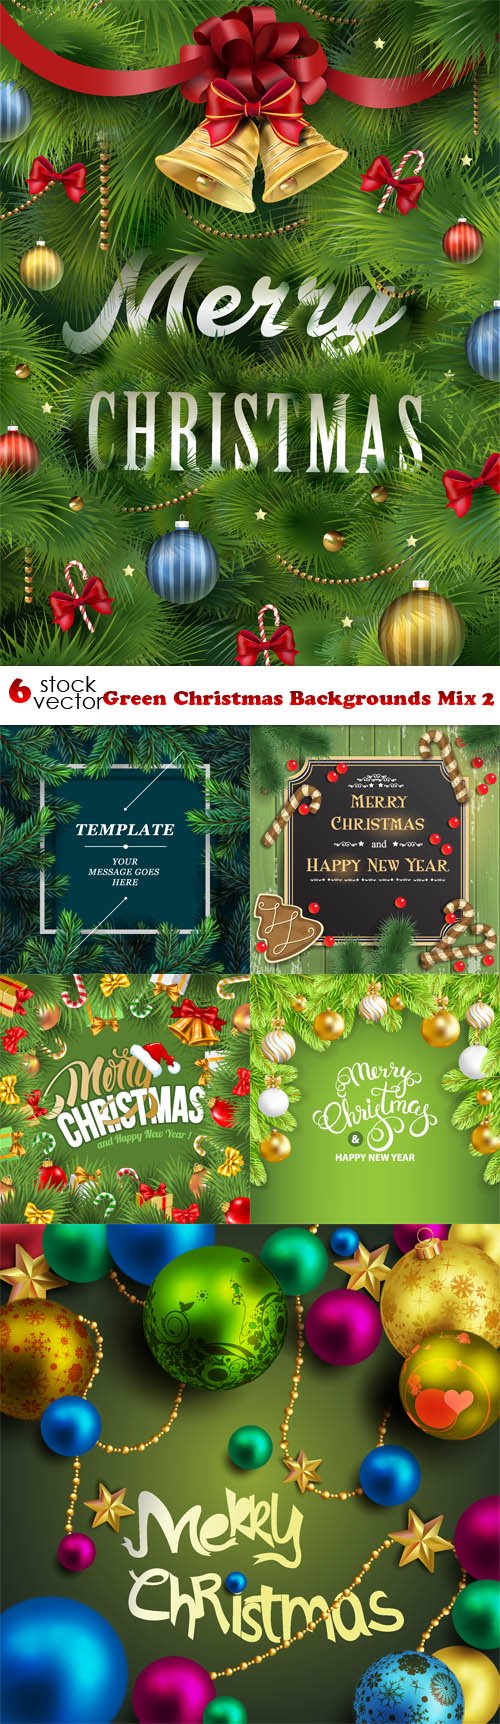 Vectors - Green Christmas Backgrounds Mix 2